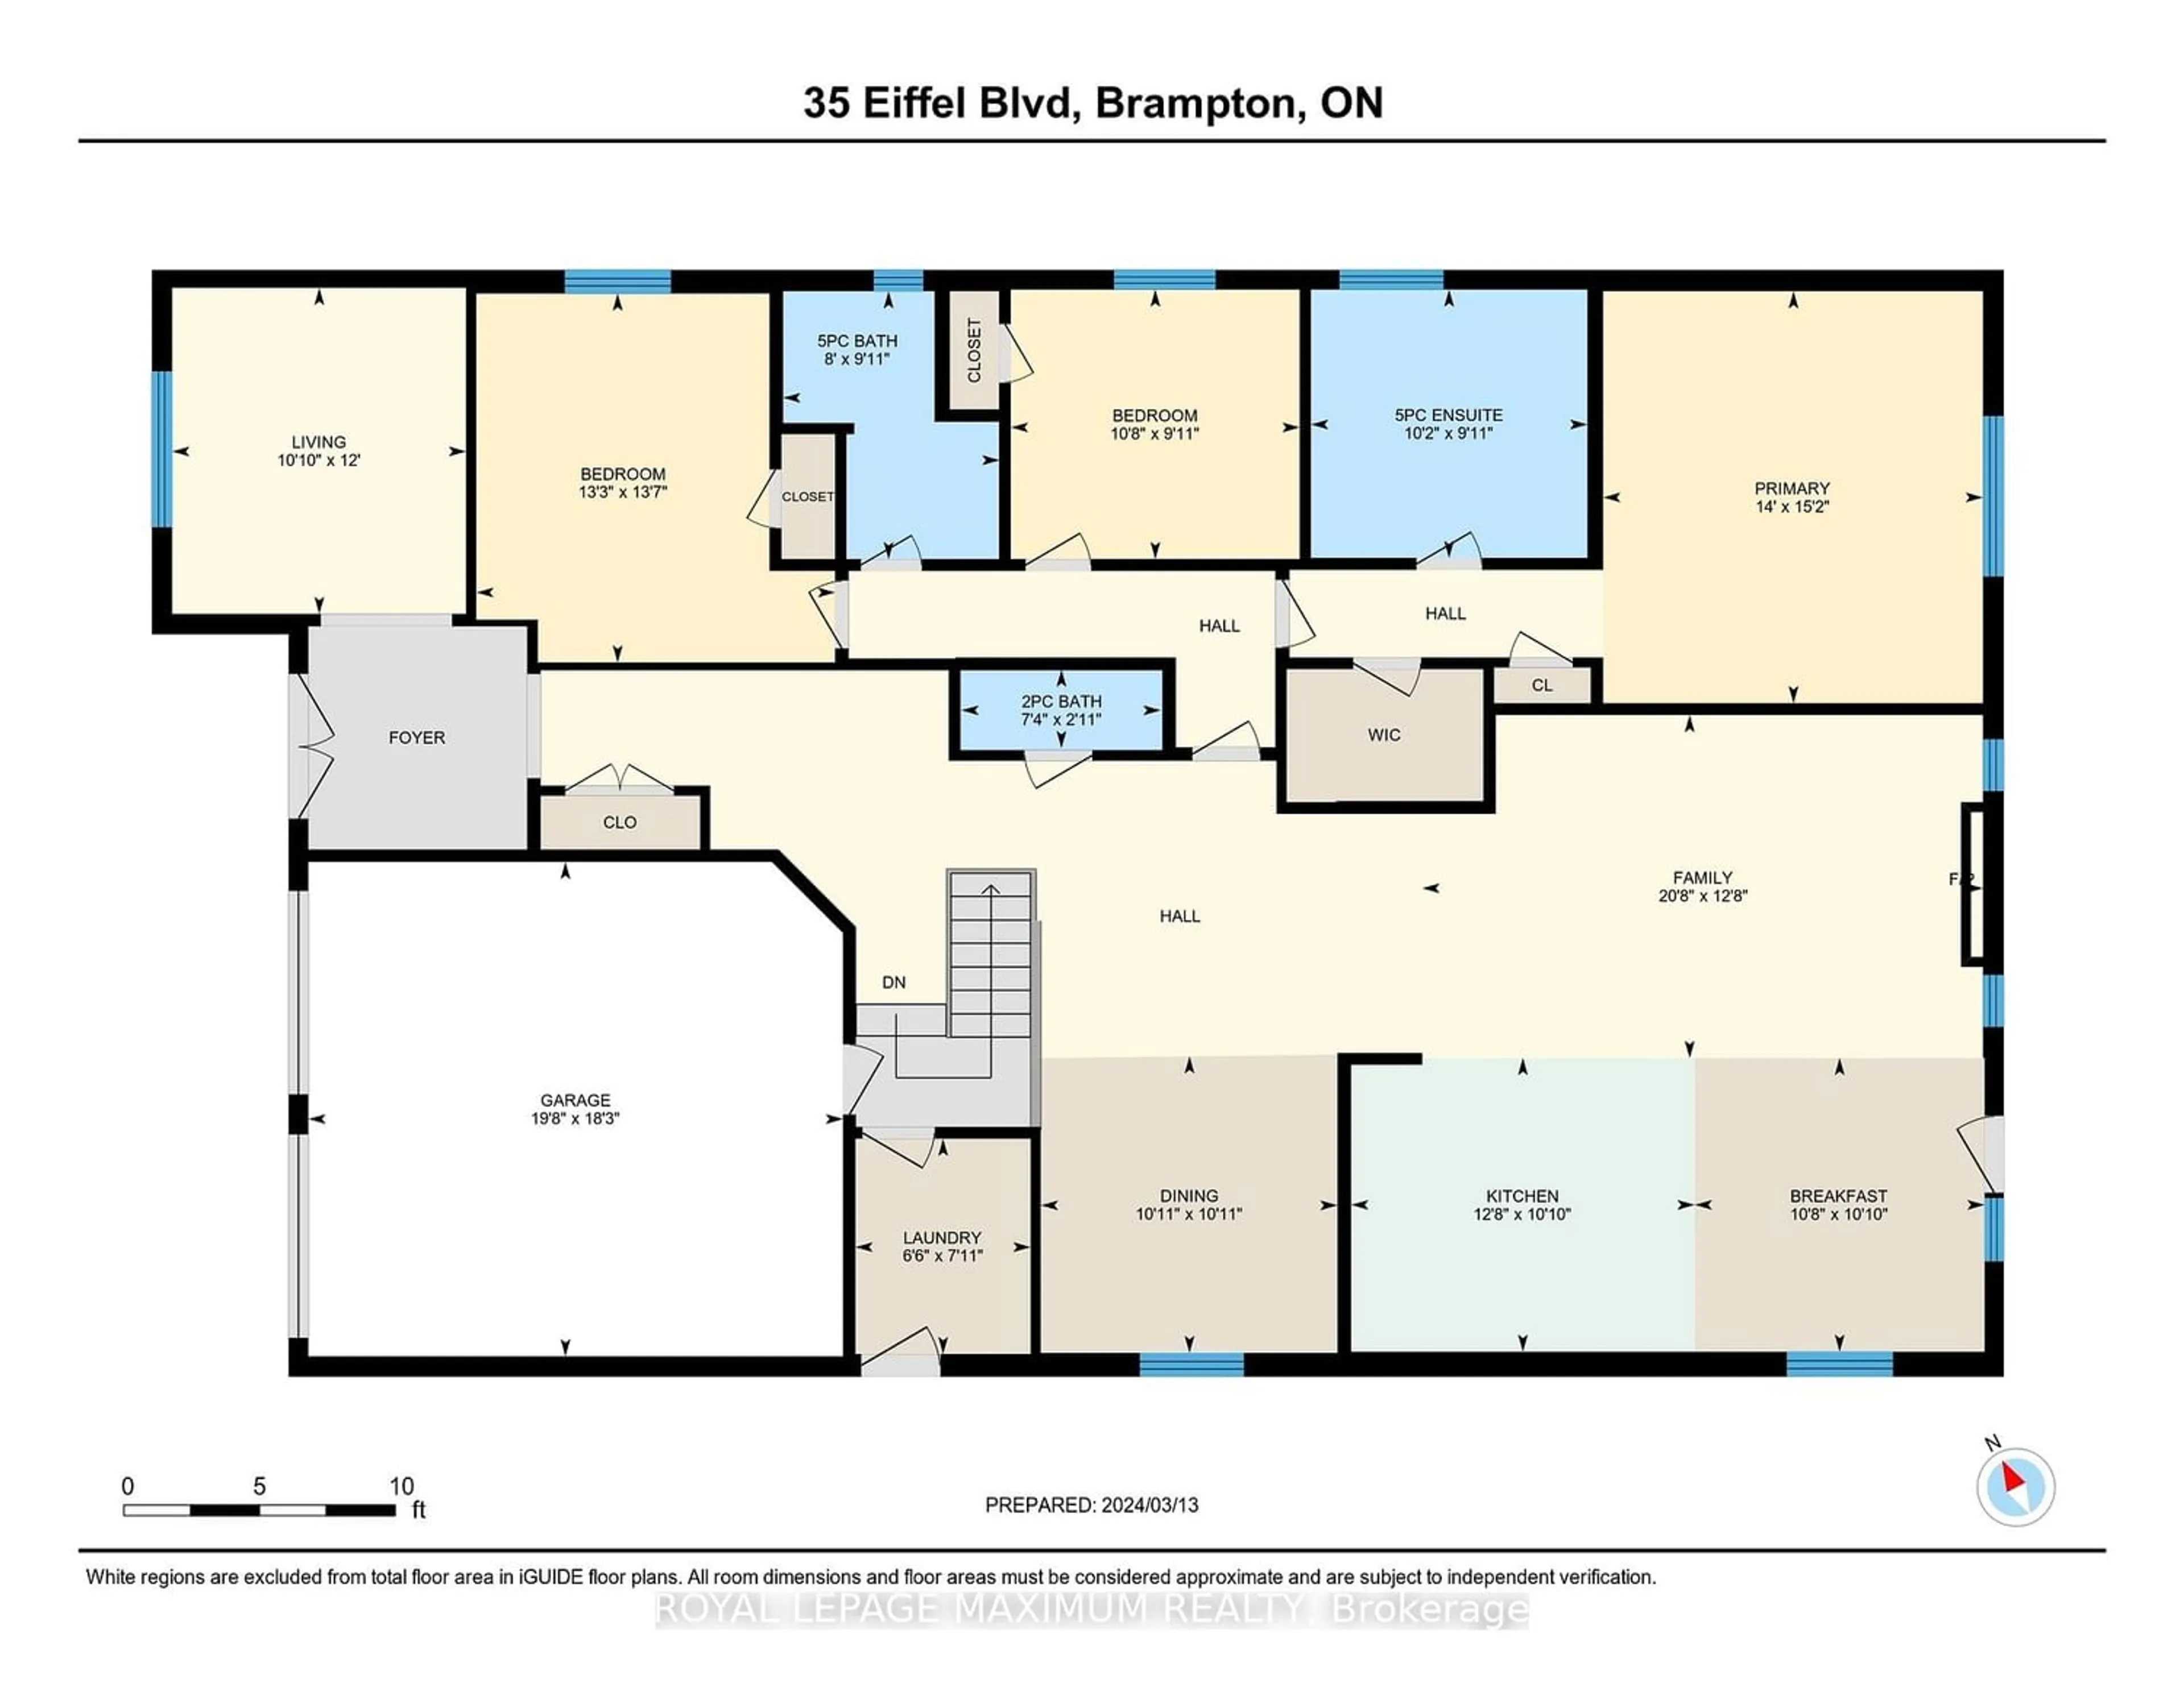 Floor plan for 35 Eiffel Blvd, Brampton Ontario L6P 1W3